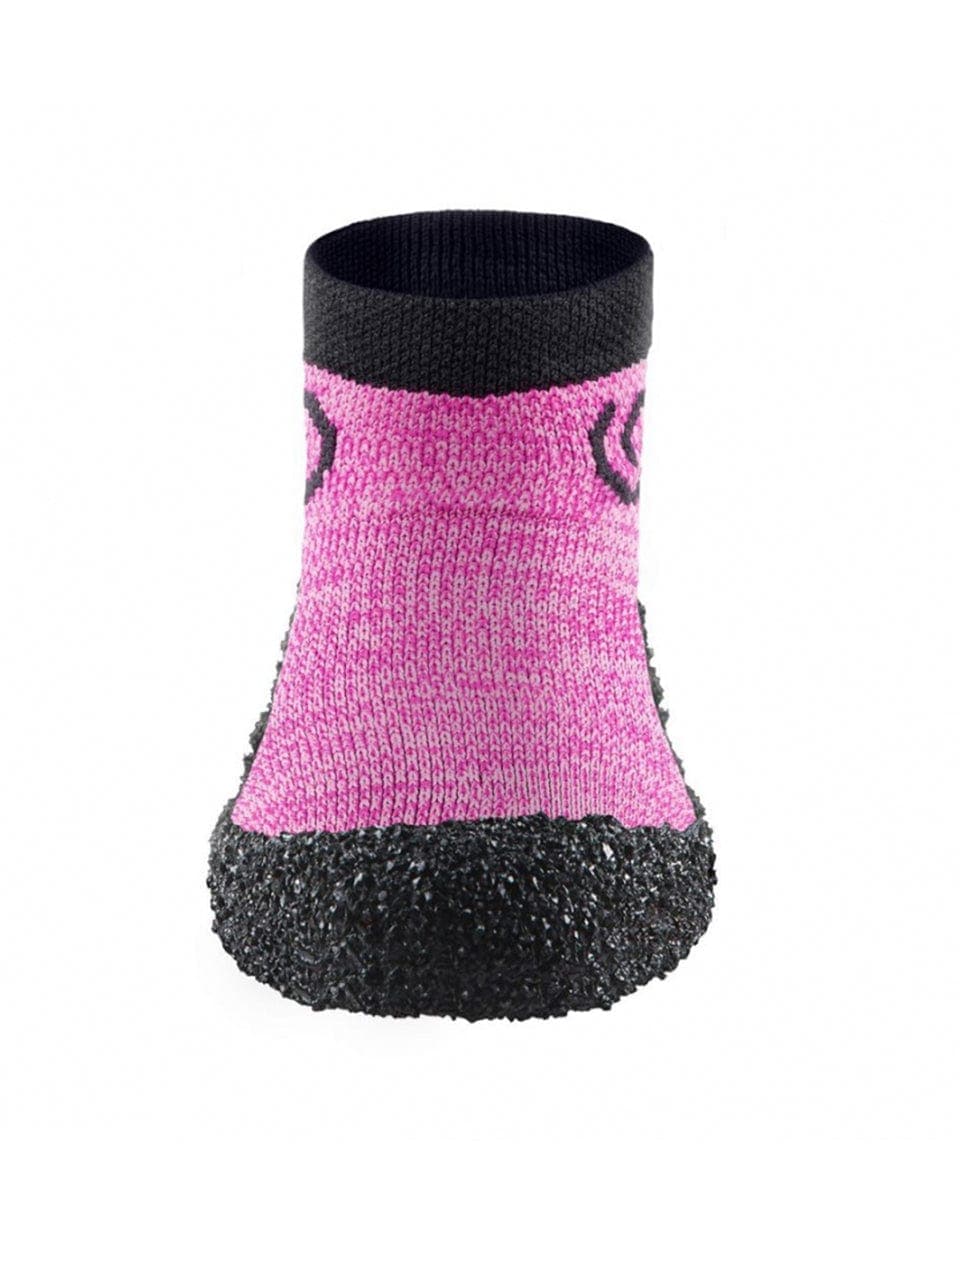 PRSAE Barefoot Shoes Skinners 1.0 Minimalist Kids Footwear - Candy Pink